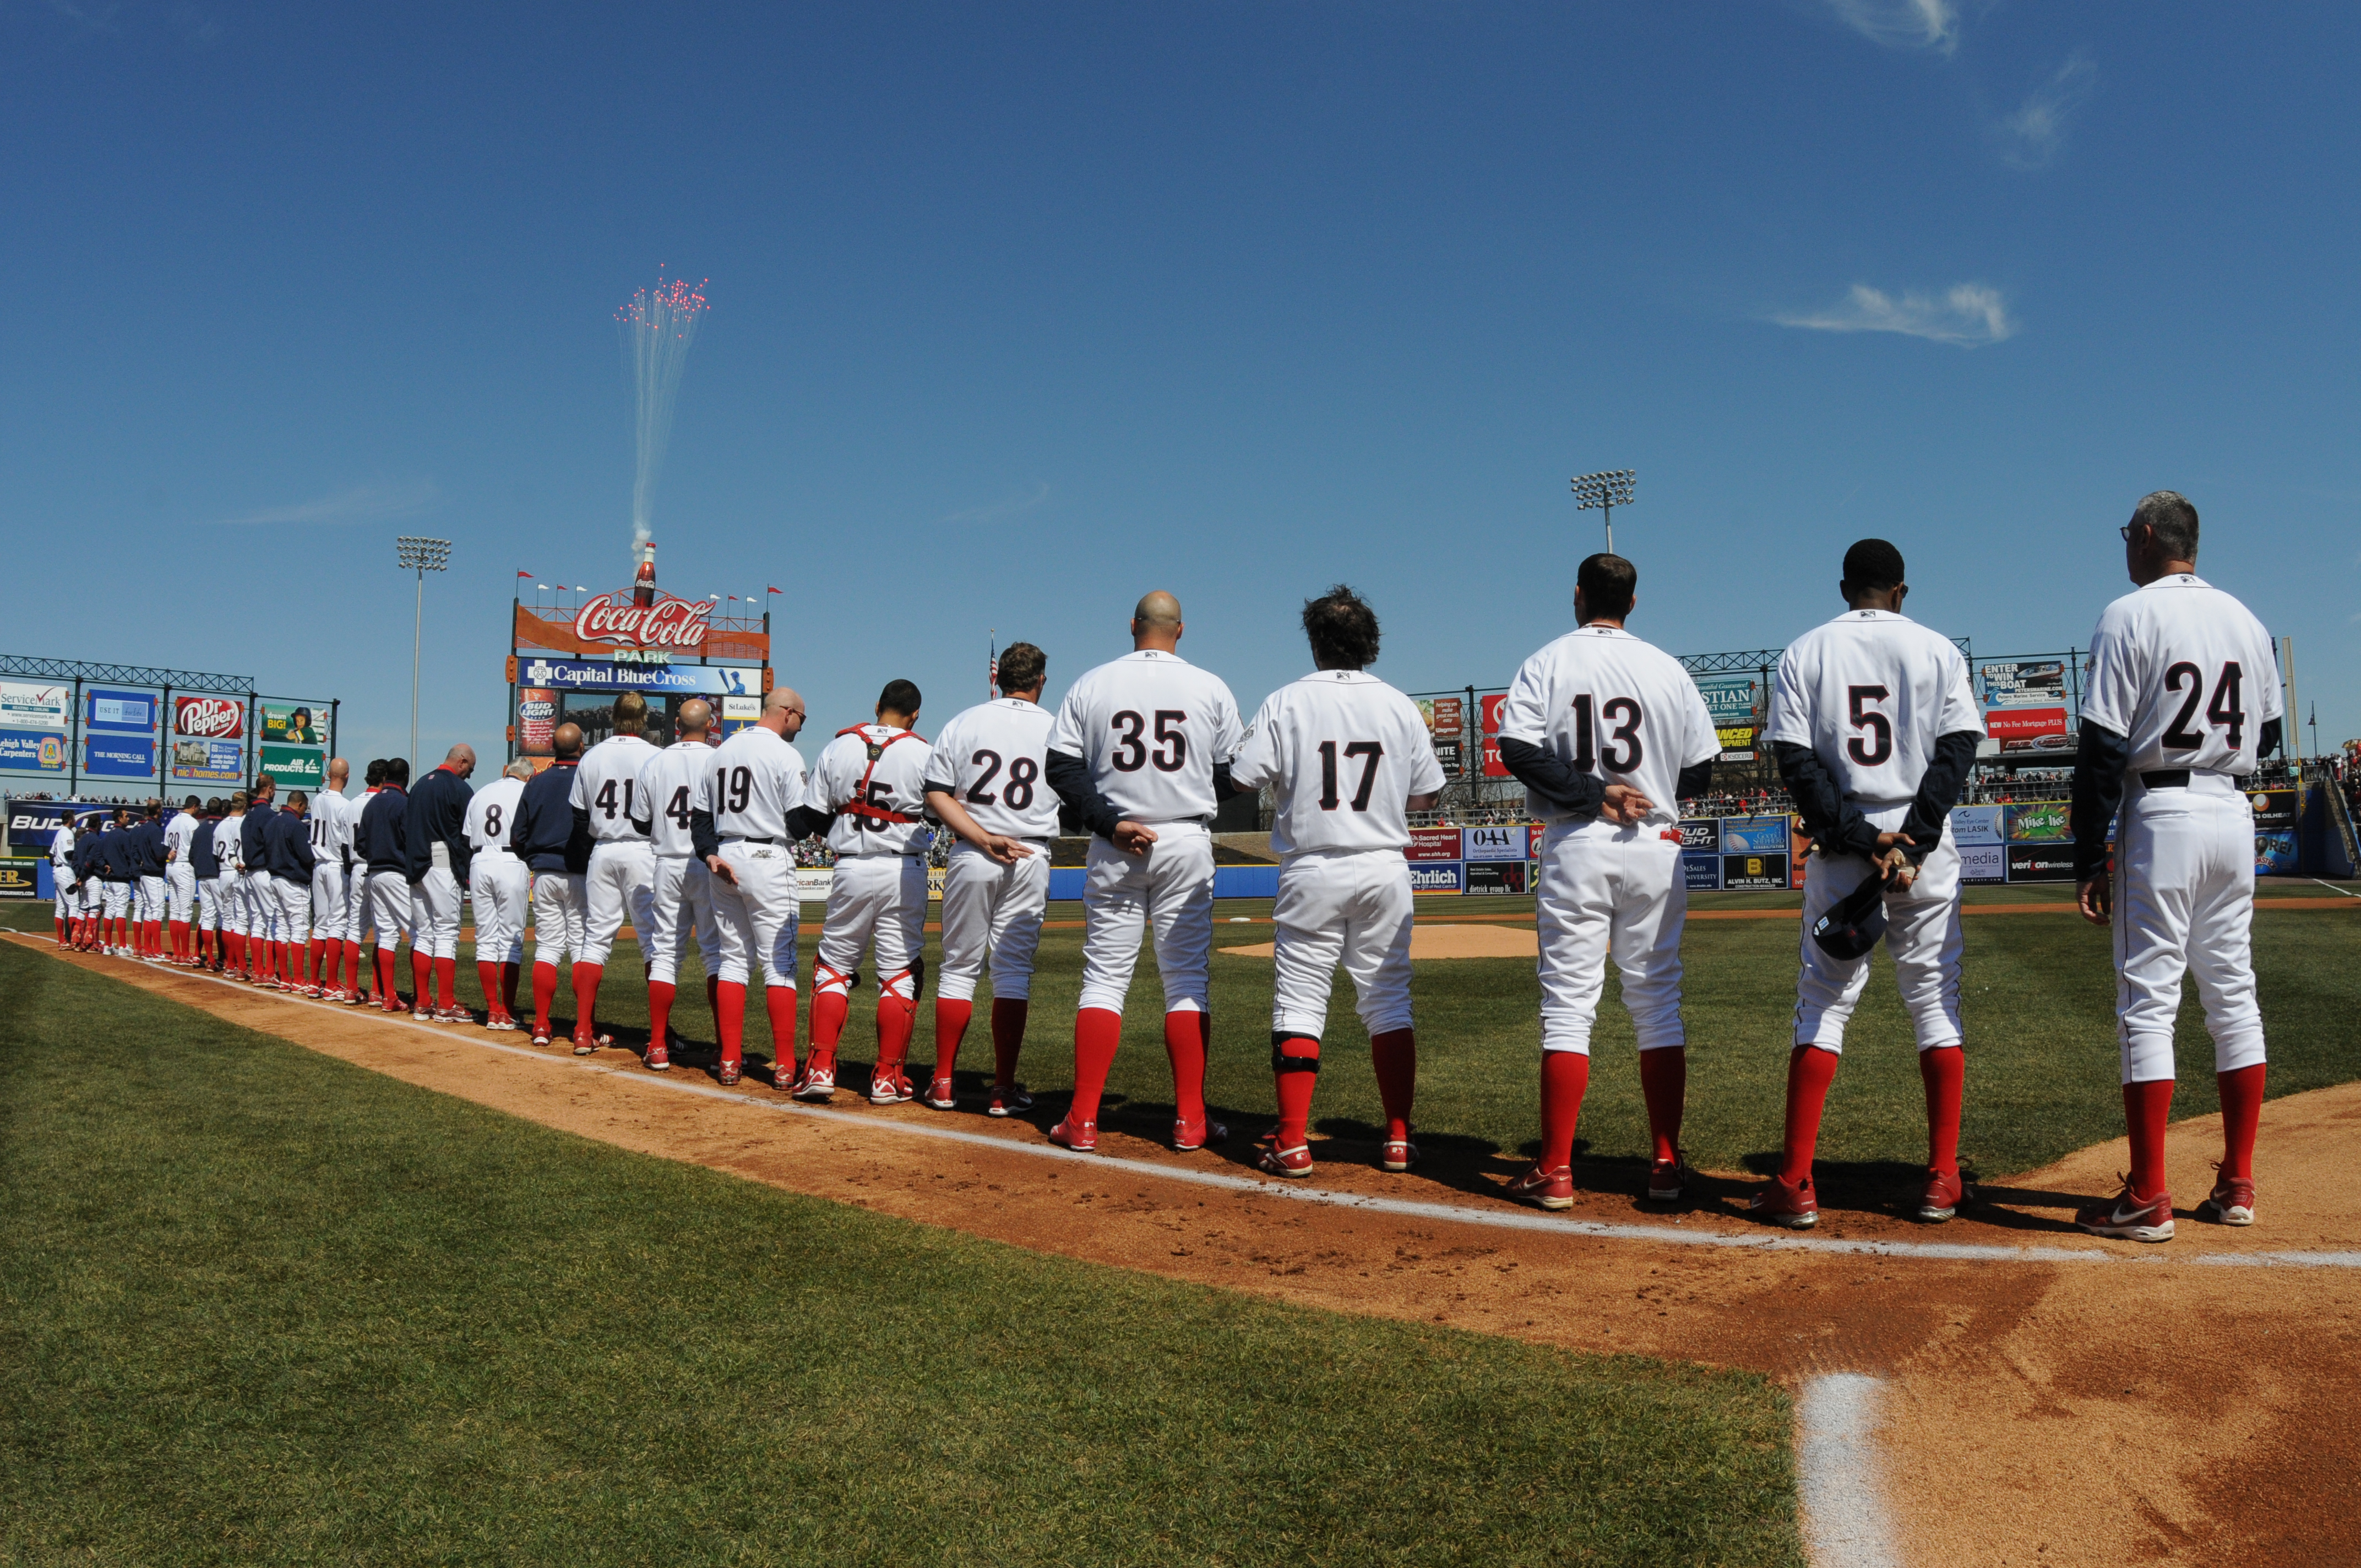 New baseball team IronPigs begins season in Allentown (with video)